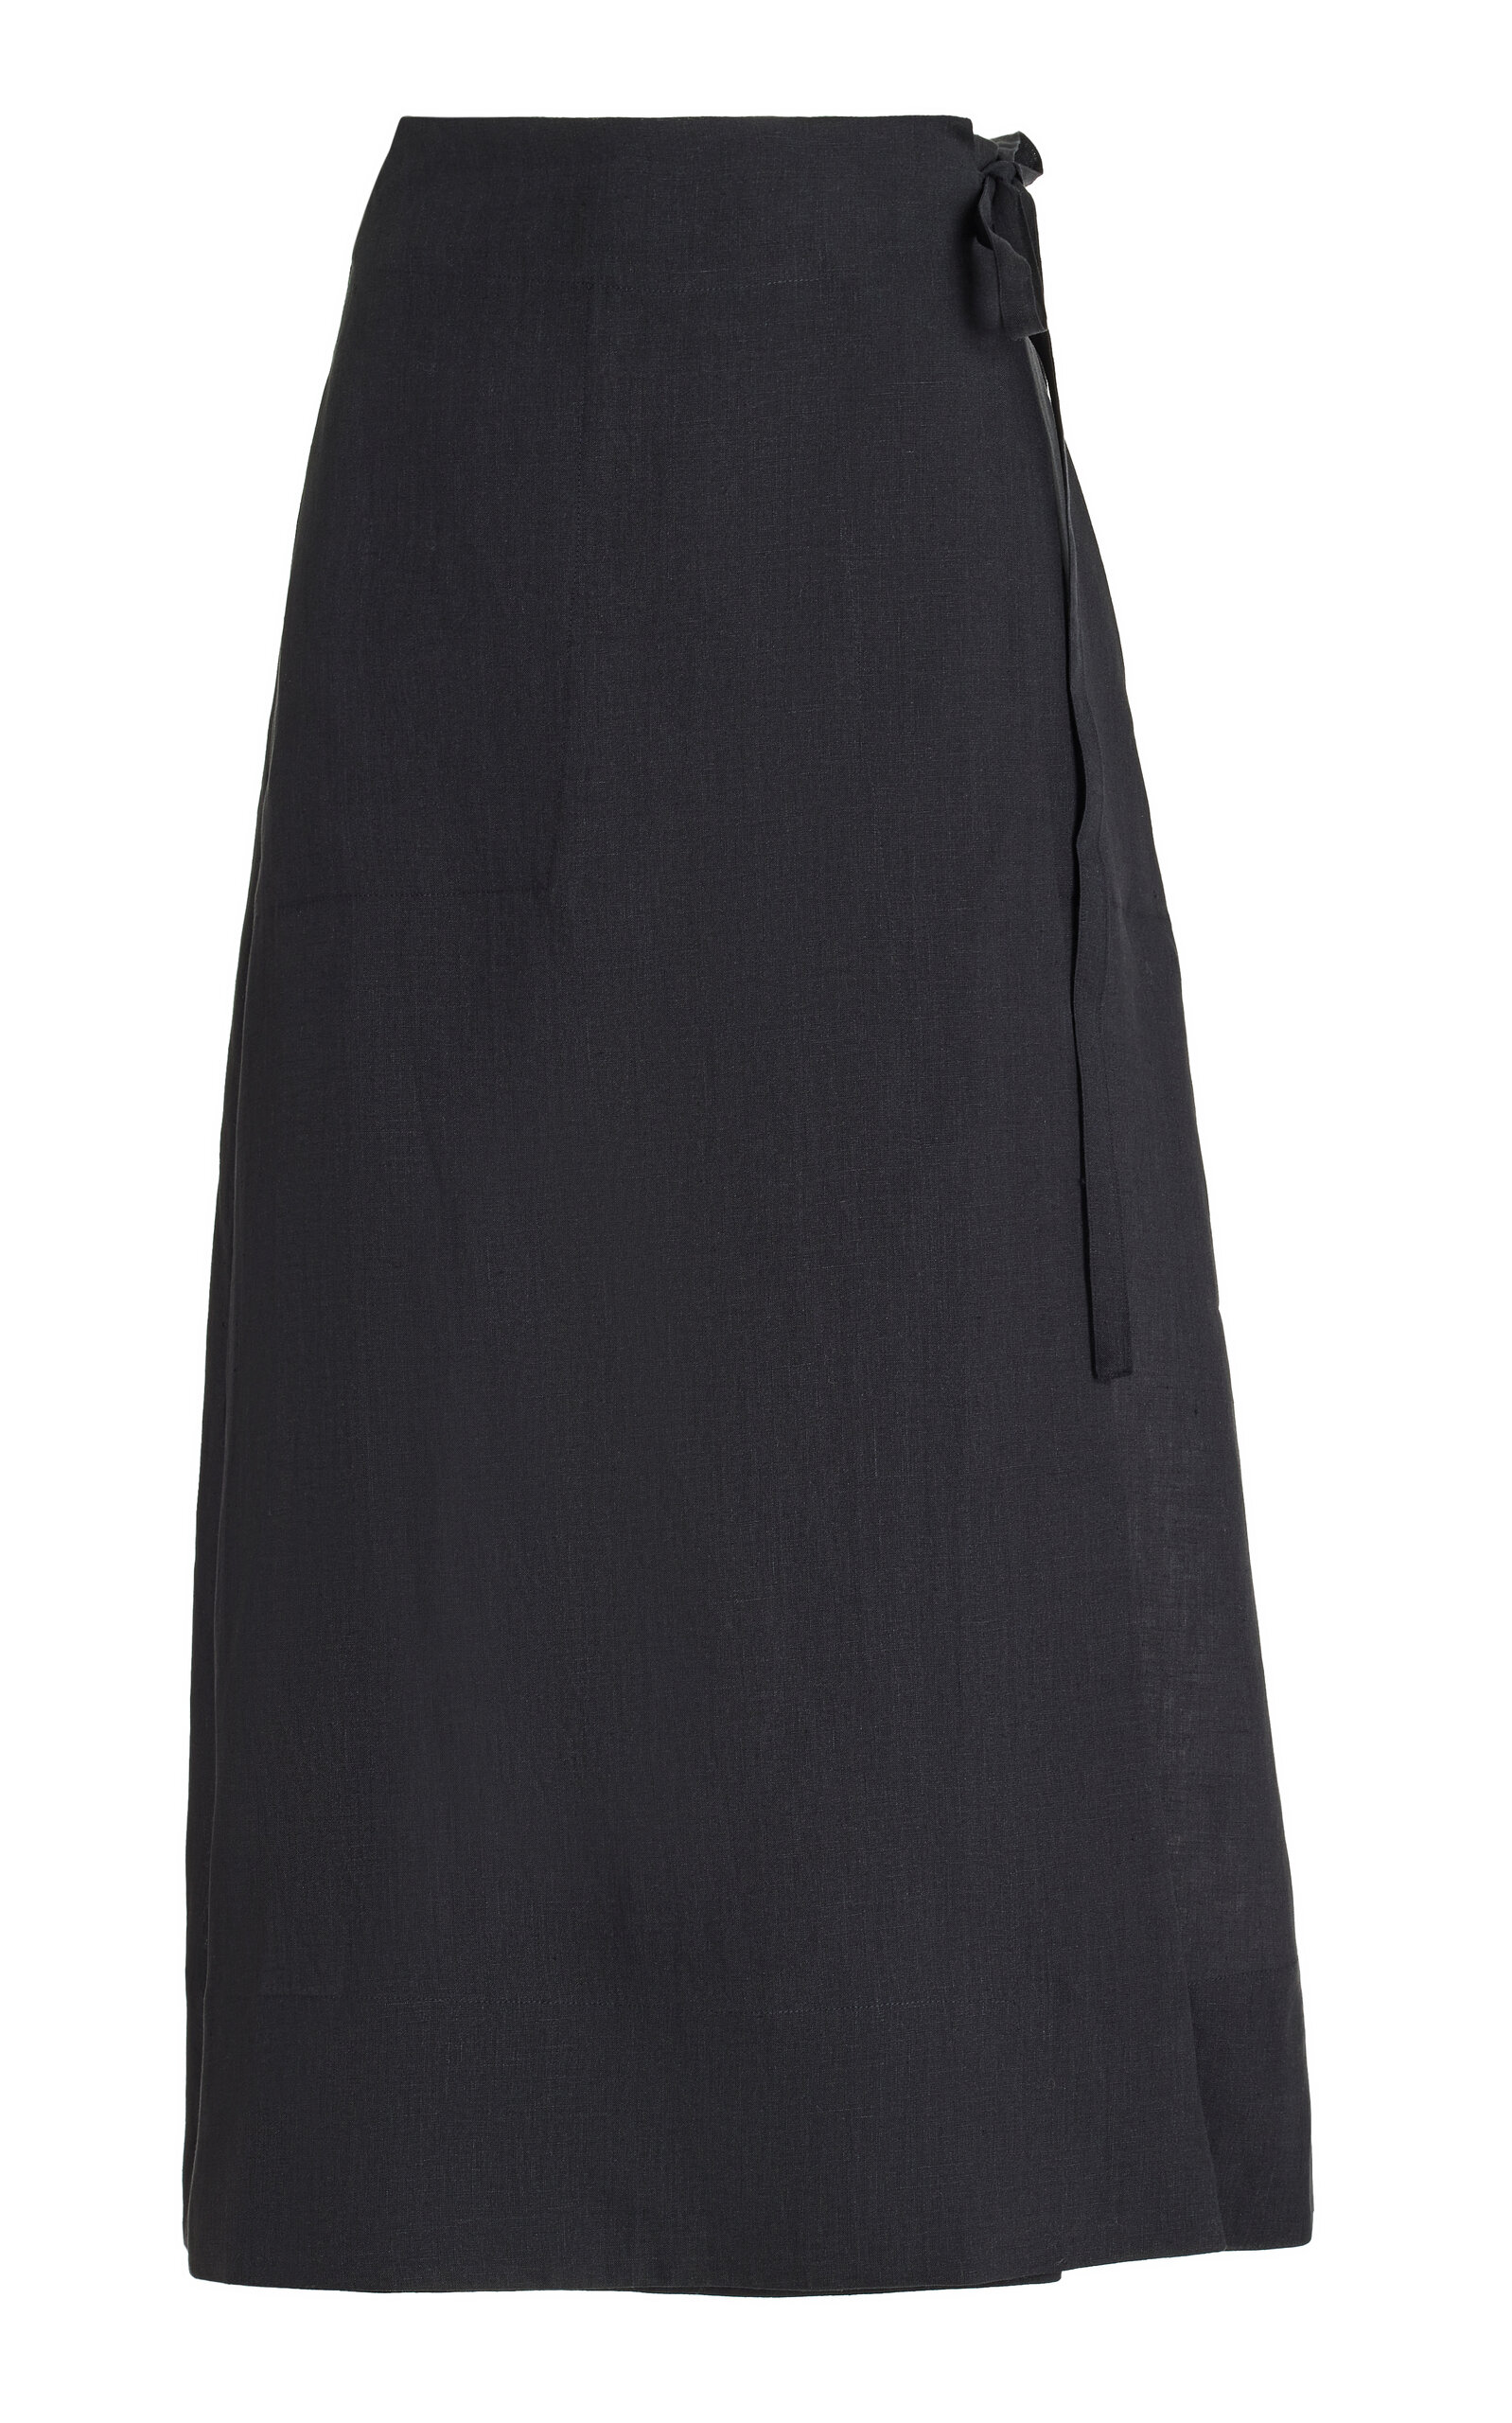 The Amalfi Linen Skirt